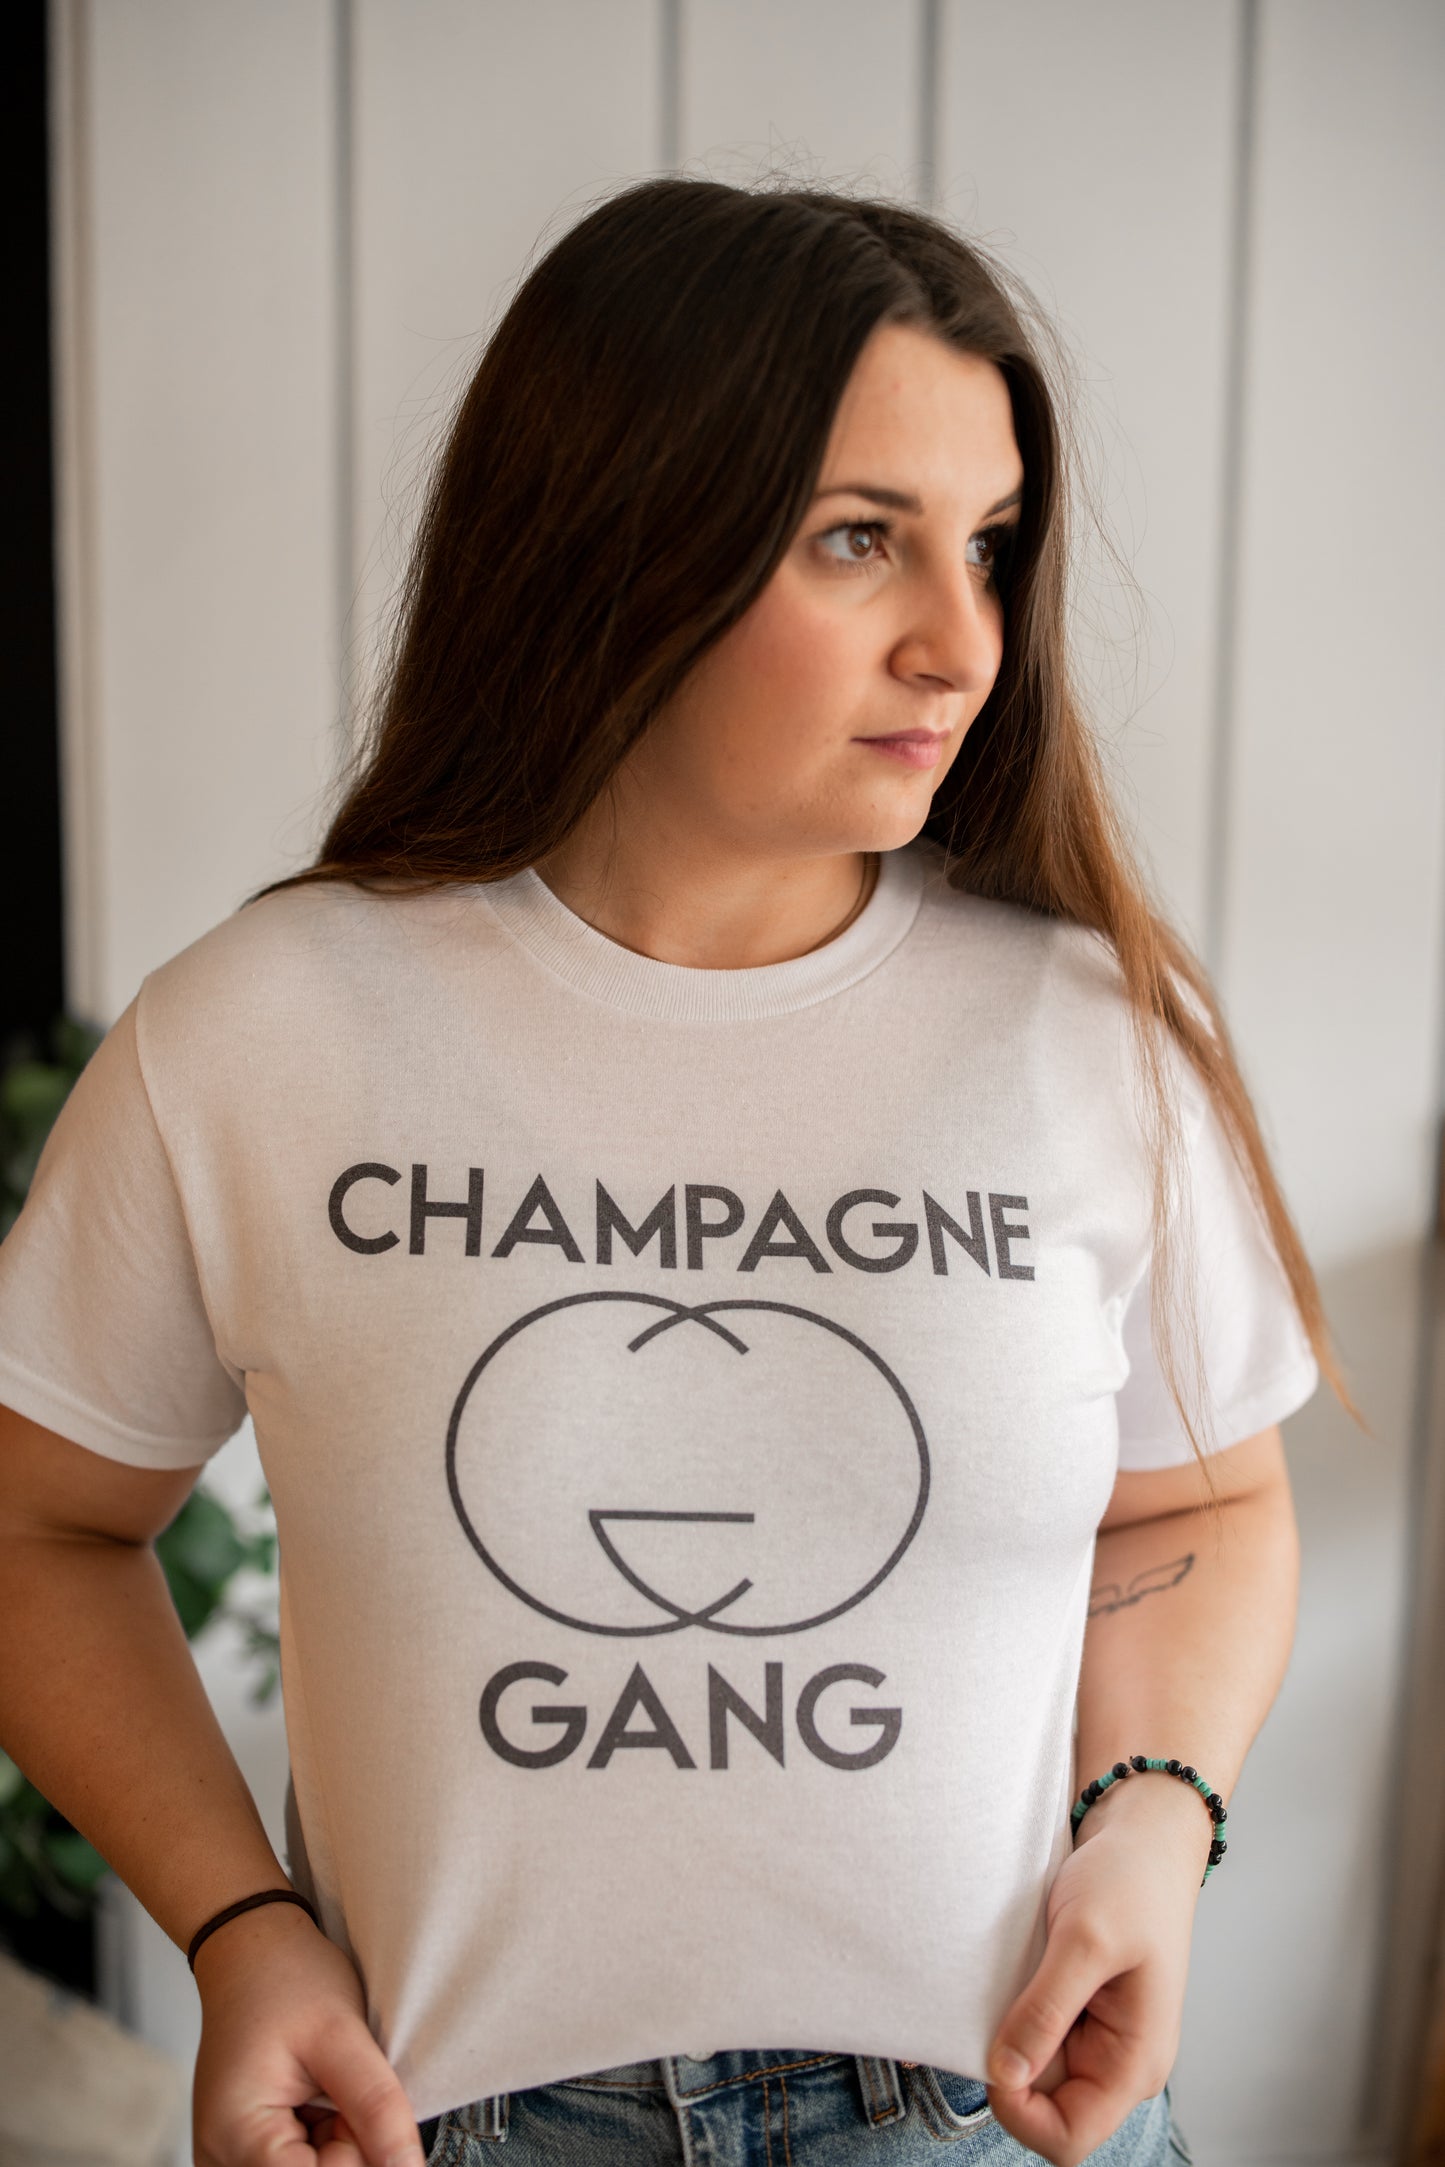 Champagne Gang Tee